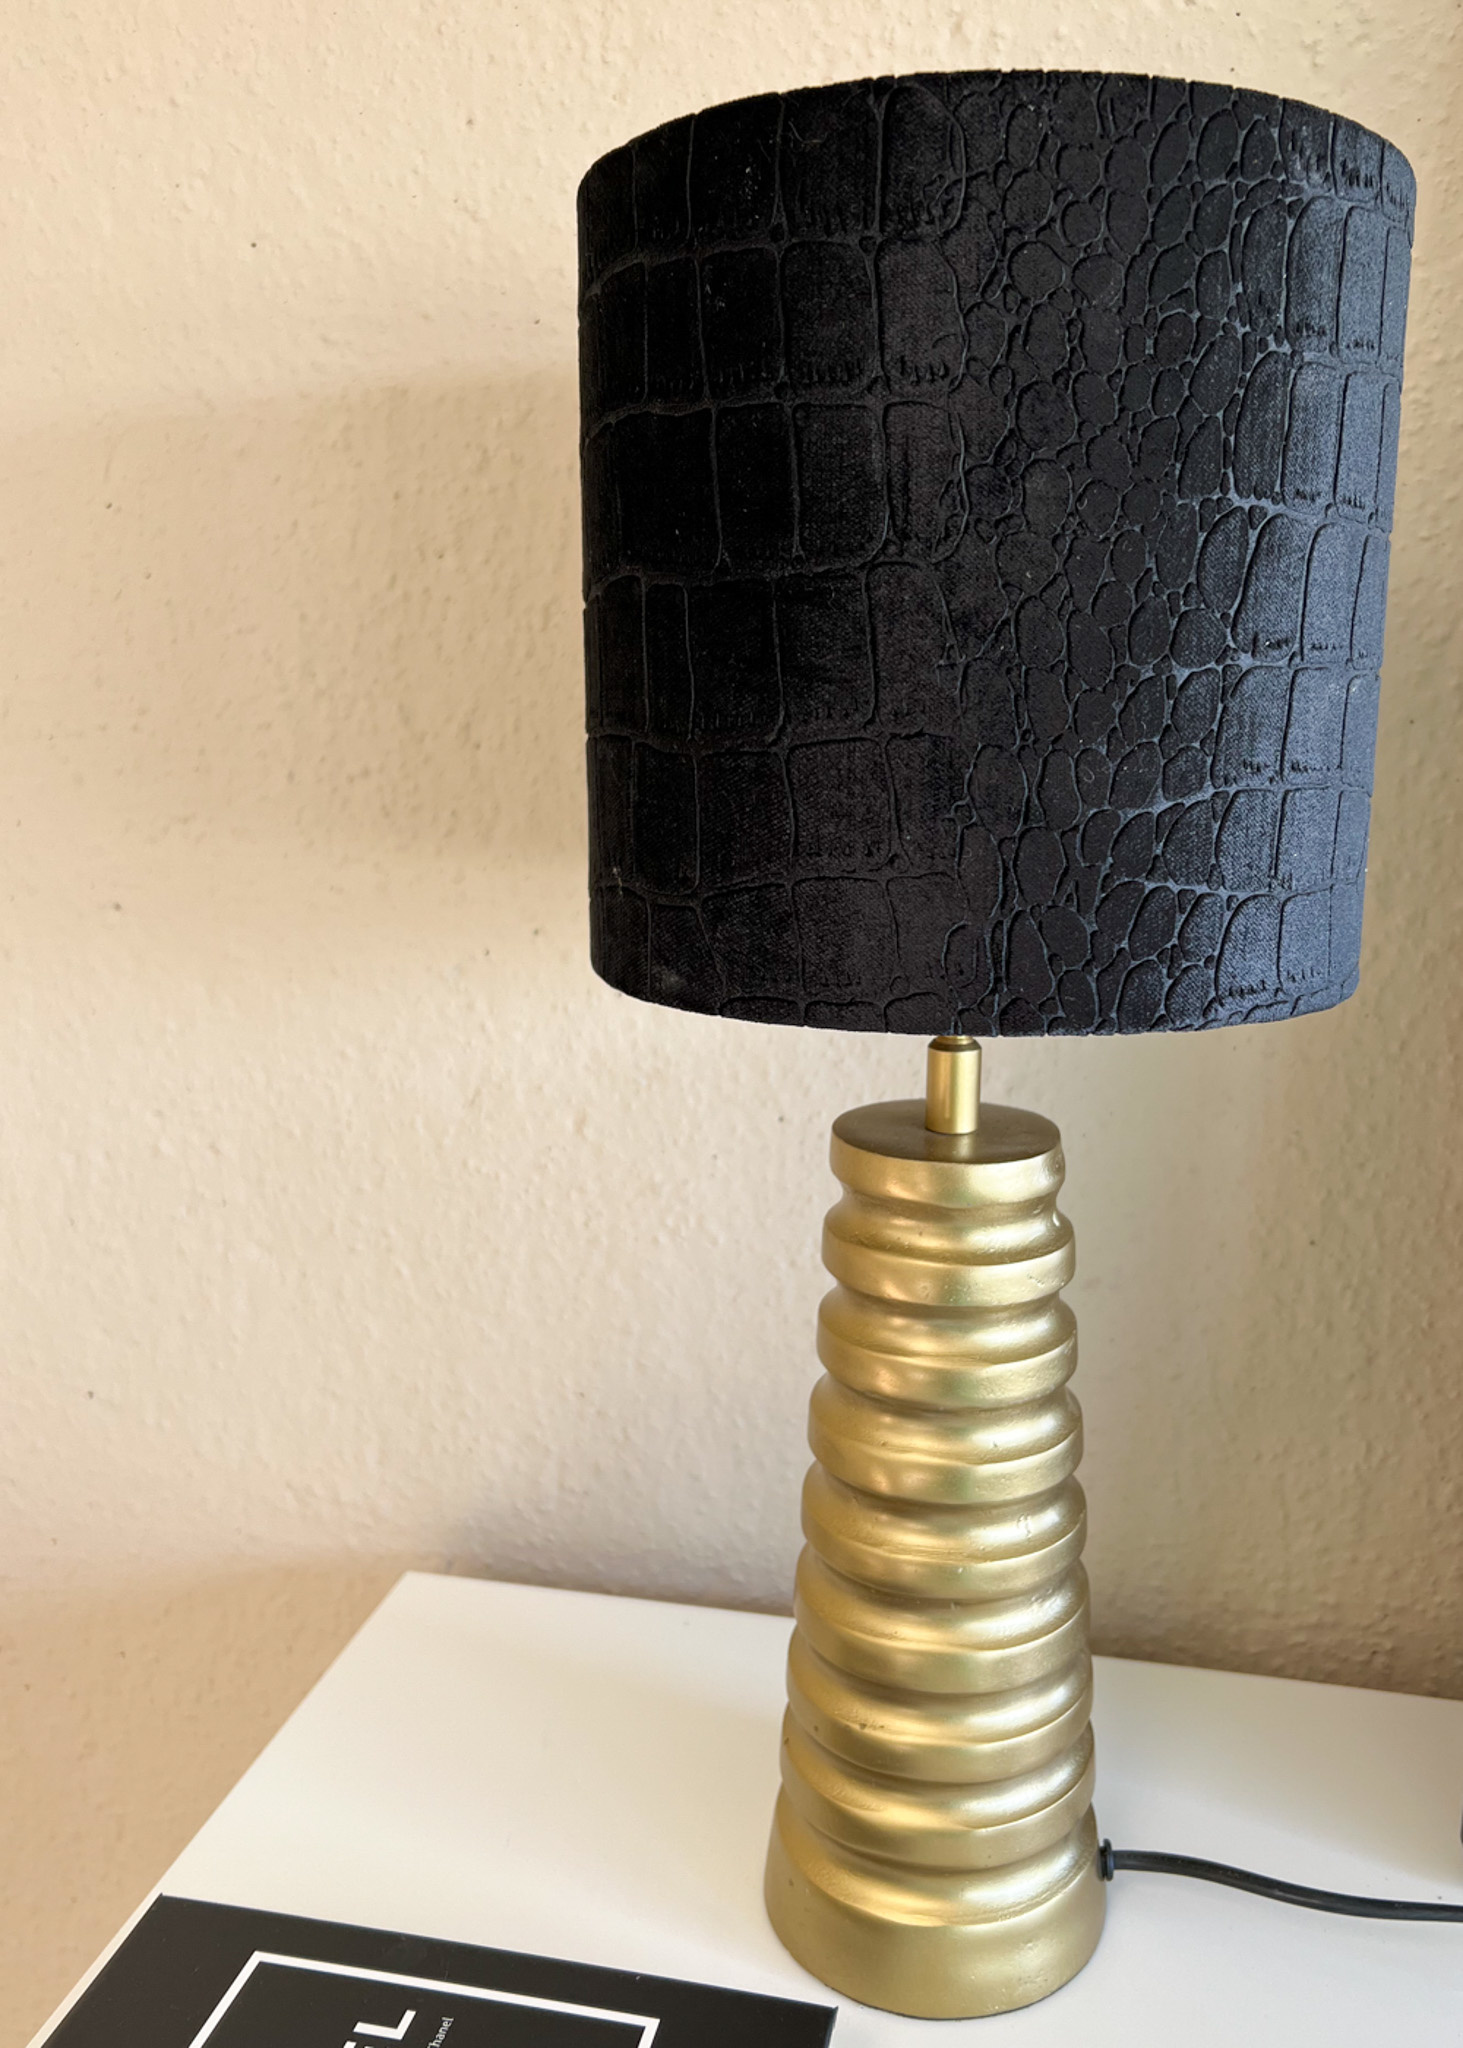 Filosofisch streepje Duwen Lamp base raw bronze kopen? Bekijk ons aanbod! 